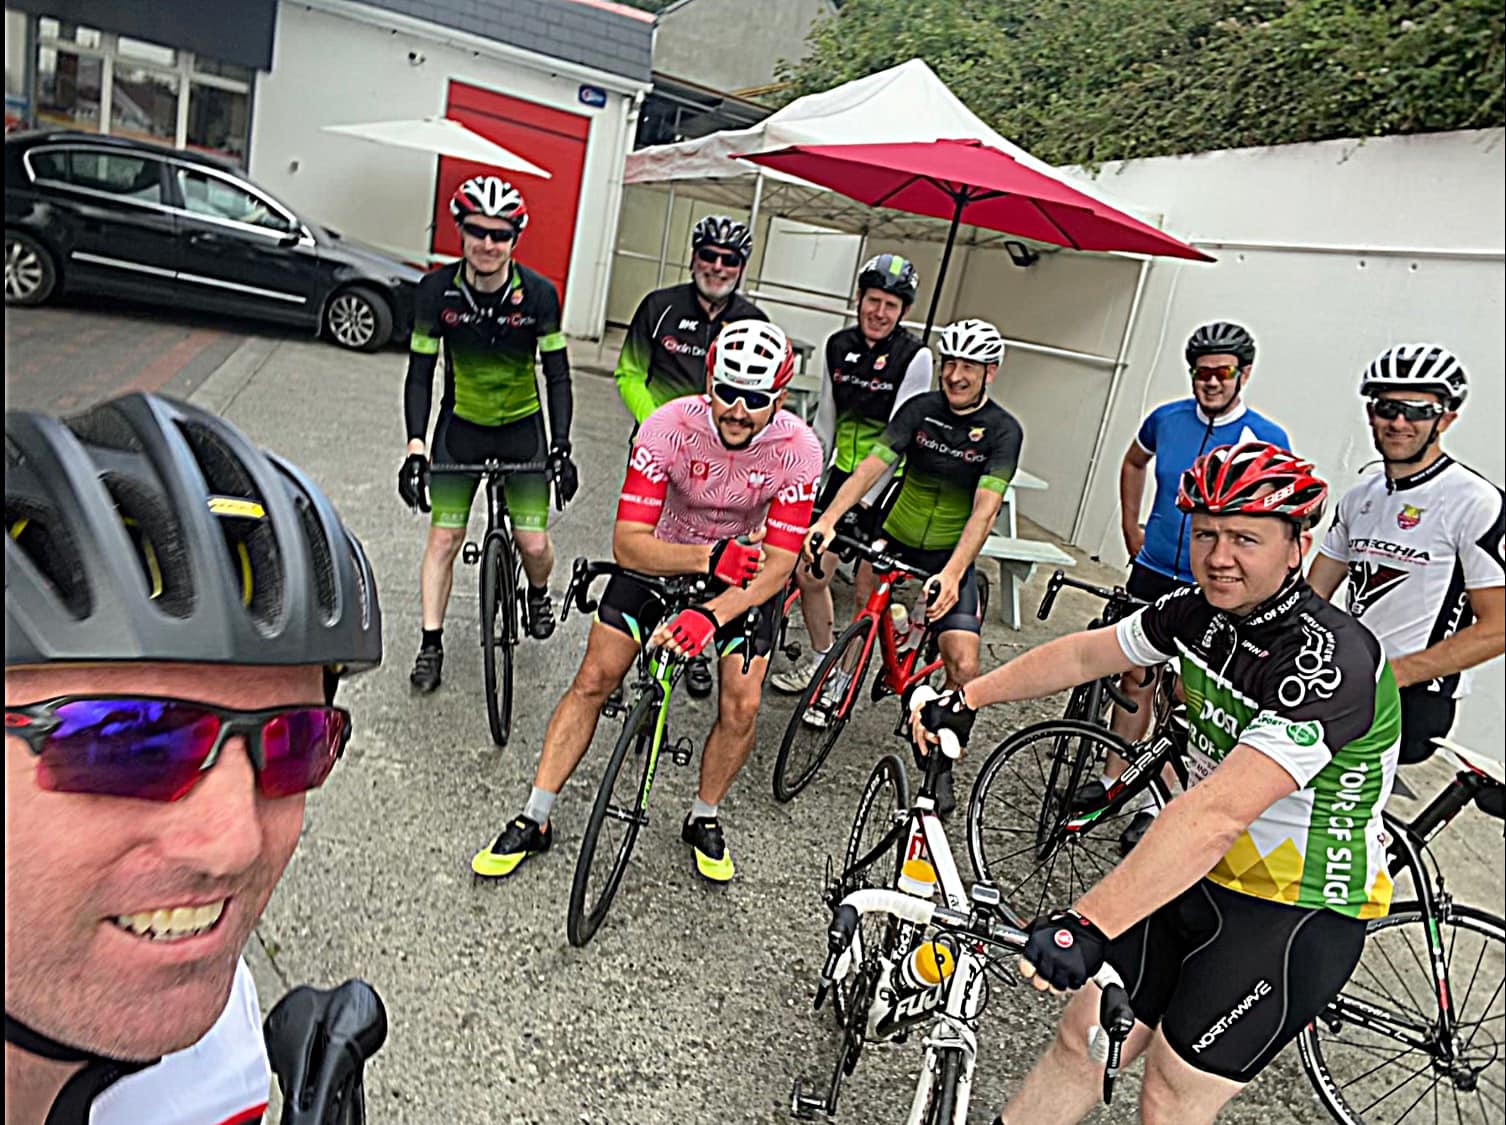 Bottecchia Cycling Club is at Feeney’s Dromore West Co. Sligo .